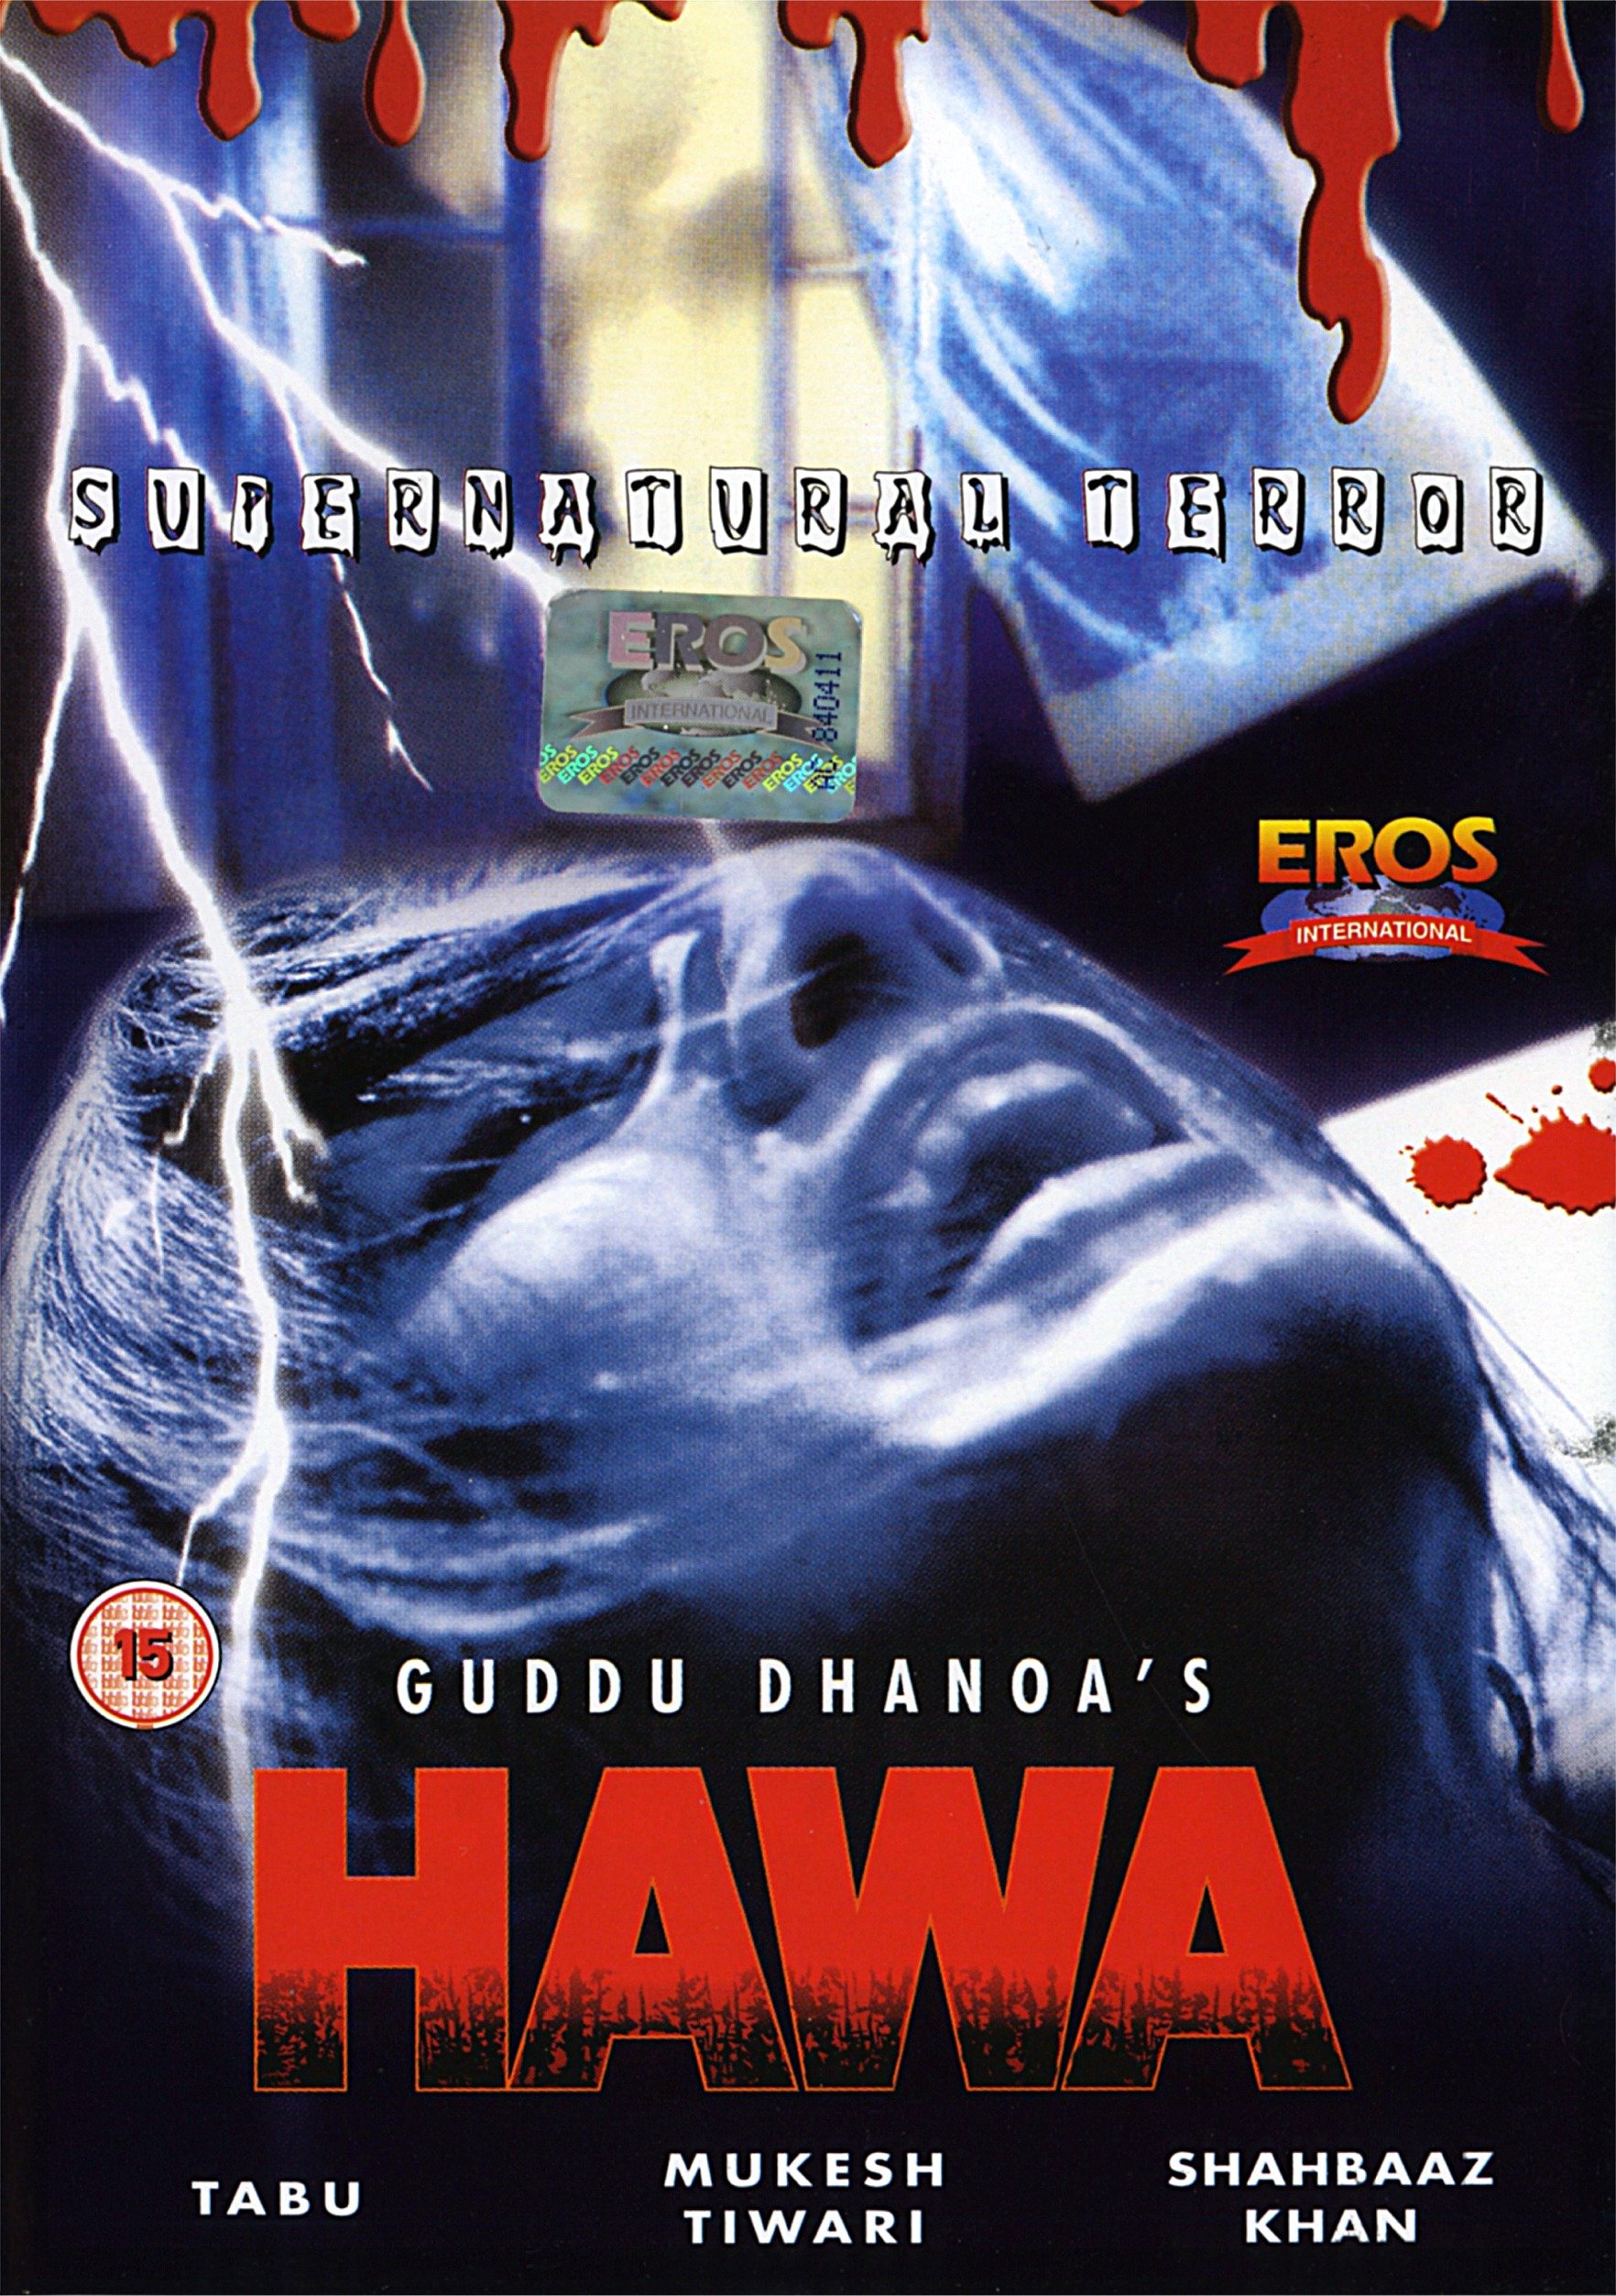 Hawa Movie Poster